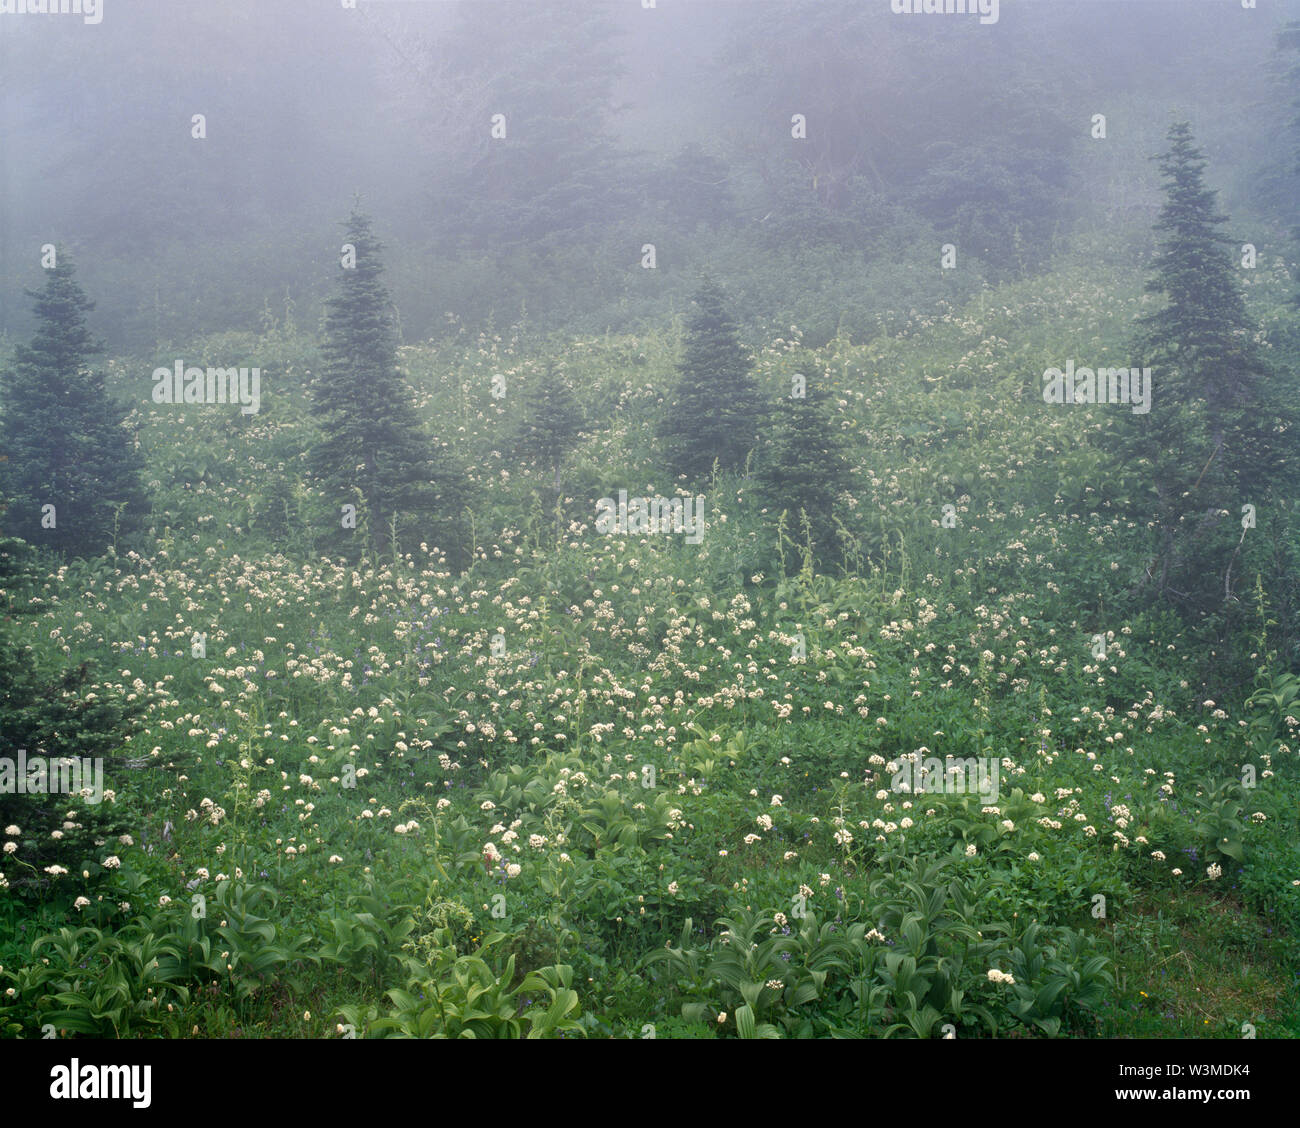 USA, Washington, Mt. Rainier National Park, Meadow of Sitka valerian  and small evergreen trees in fog. Stock Photo